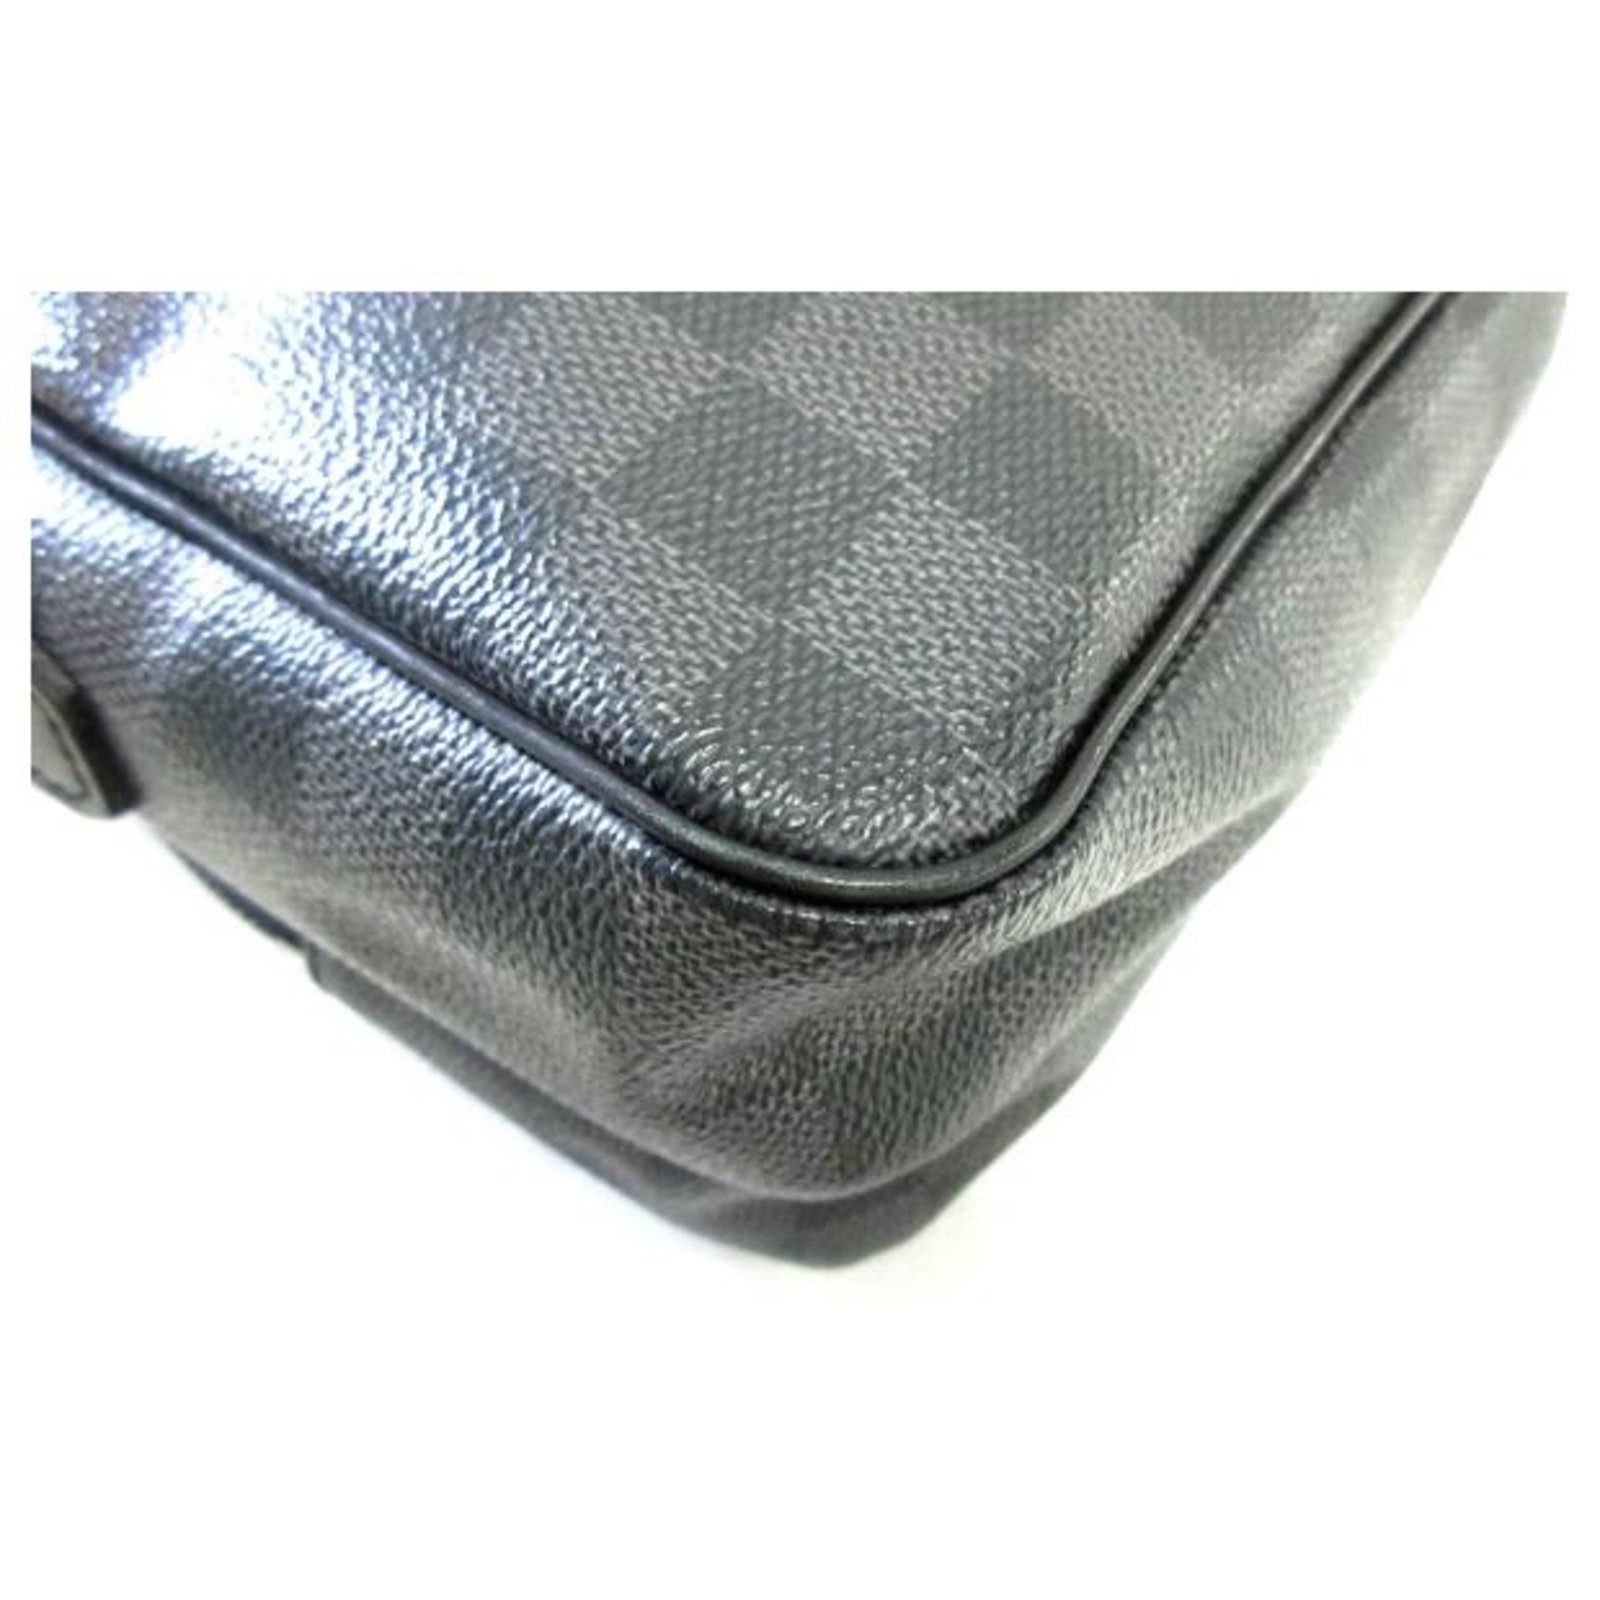 LOUIS VUITTON Damier Graphite Rem N41446 Men's・Shoulder Bag from Japan  JPN jp